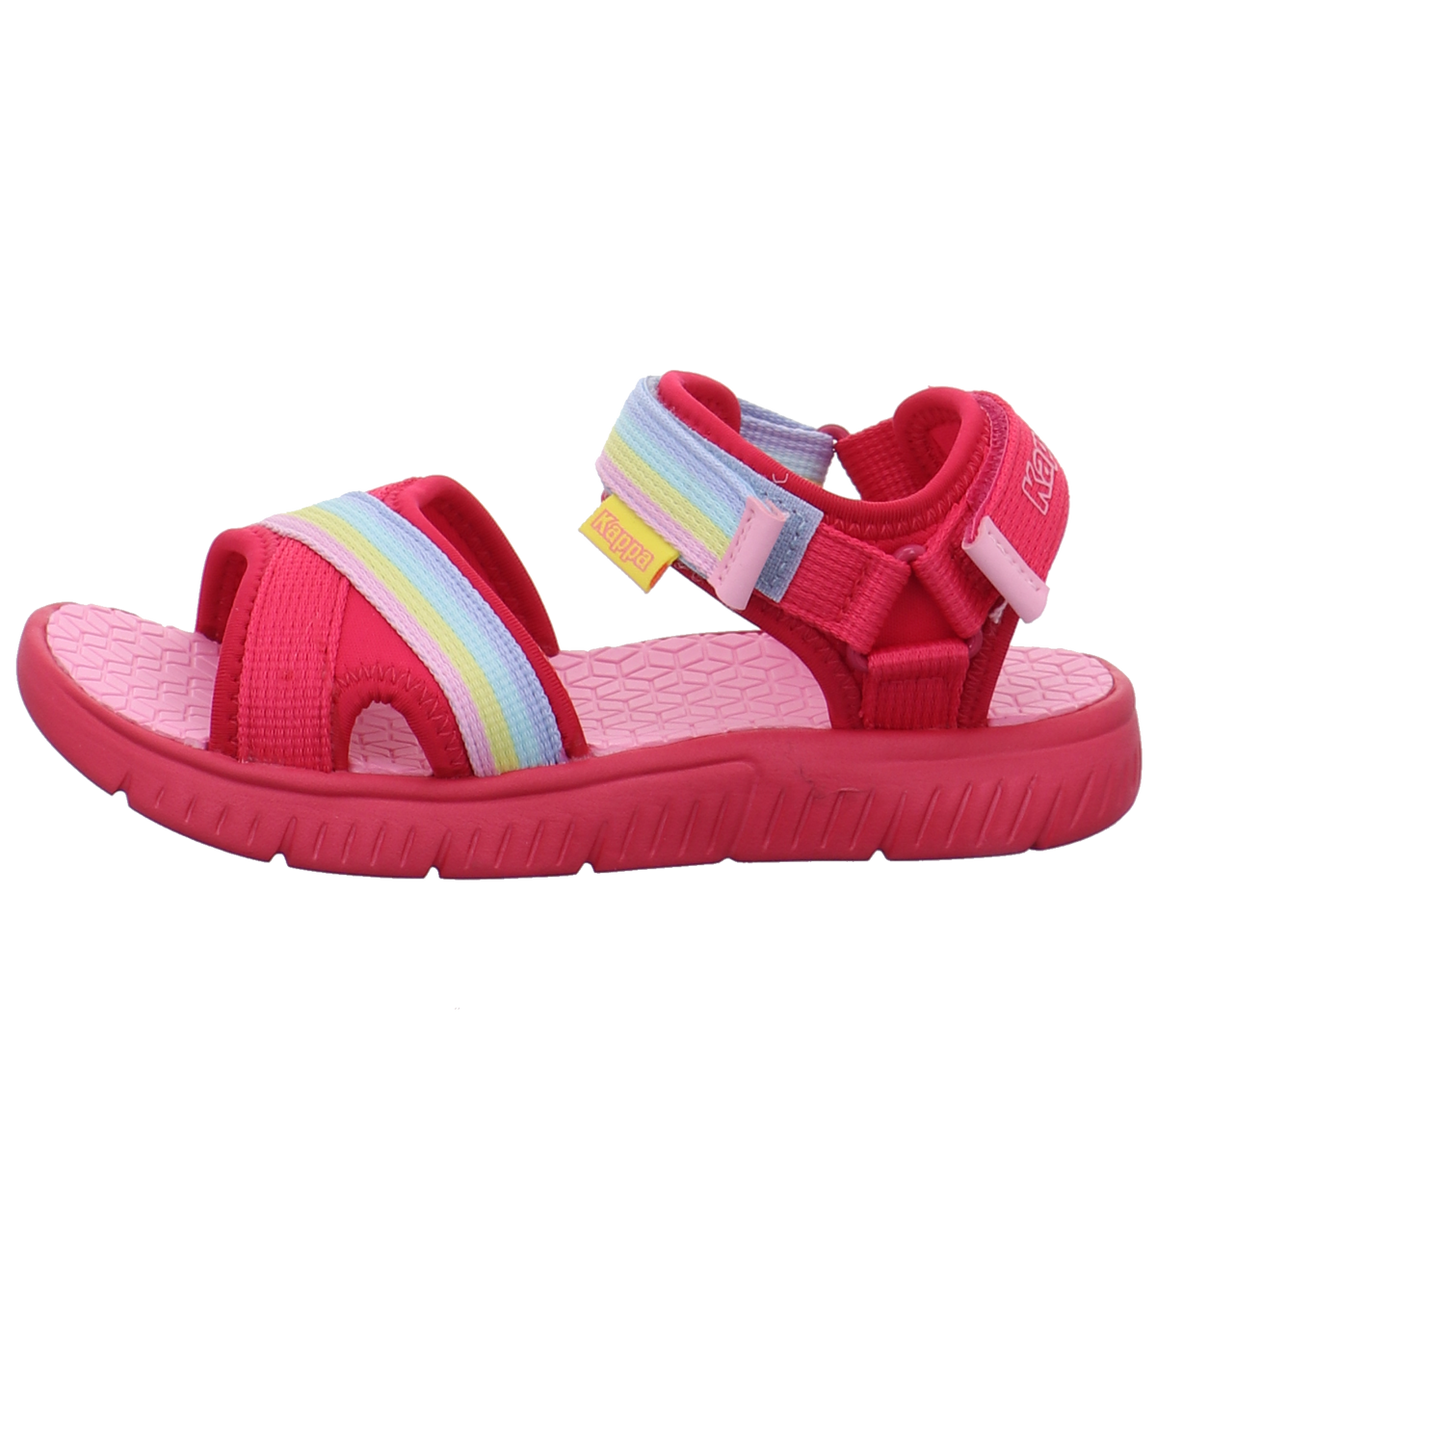 Kappa Offene Schuhe pink Bild1